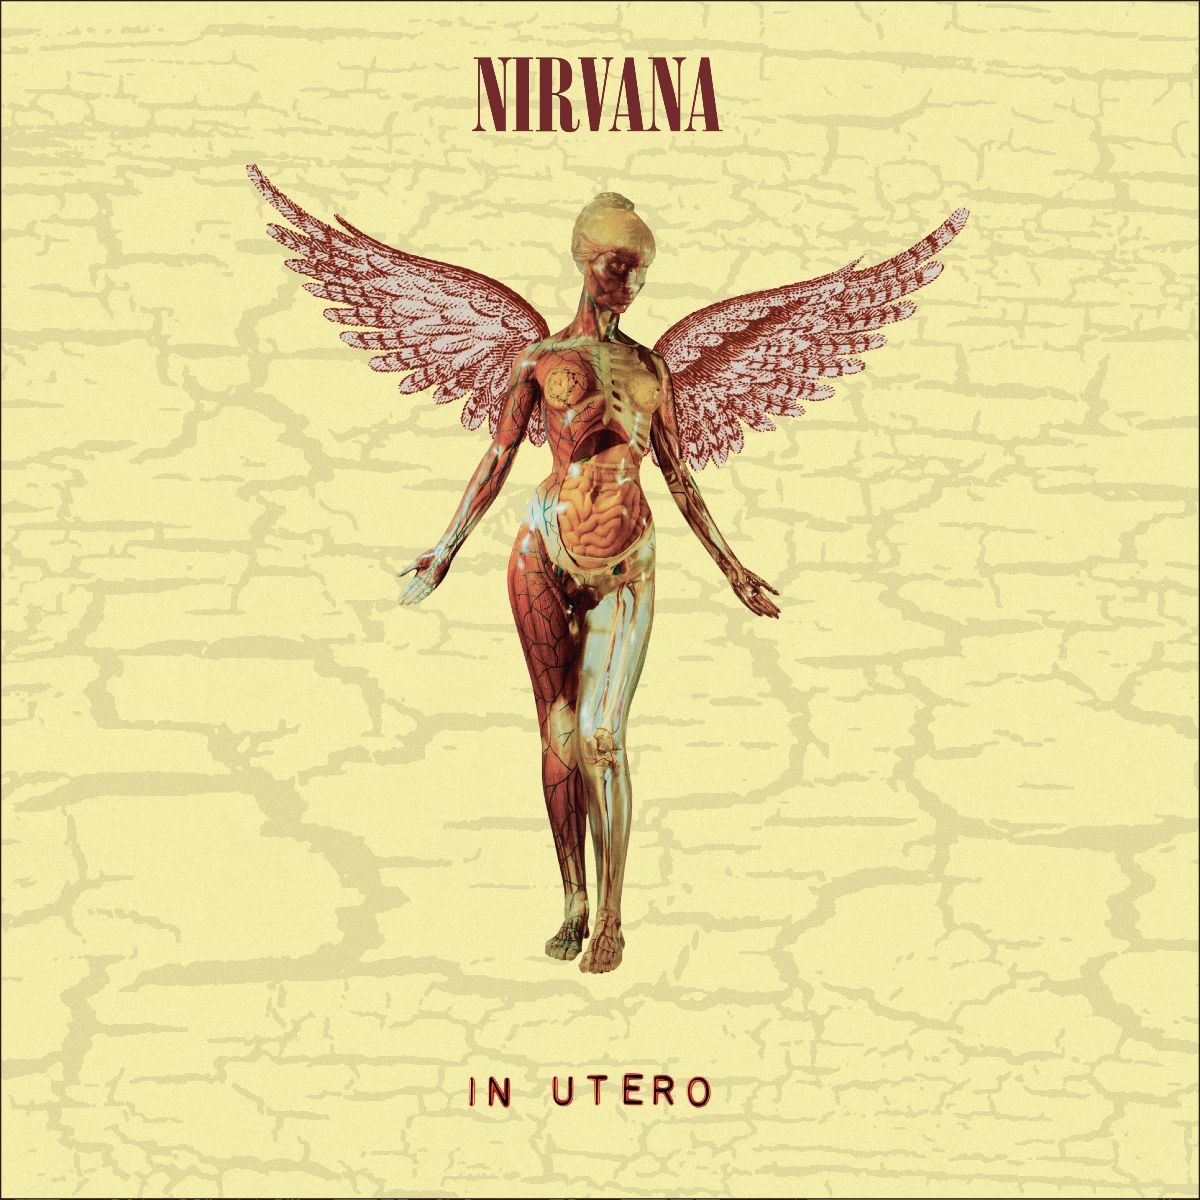 Nirvana ‘In Utero’ album artwork